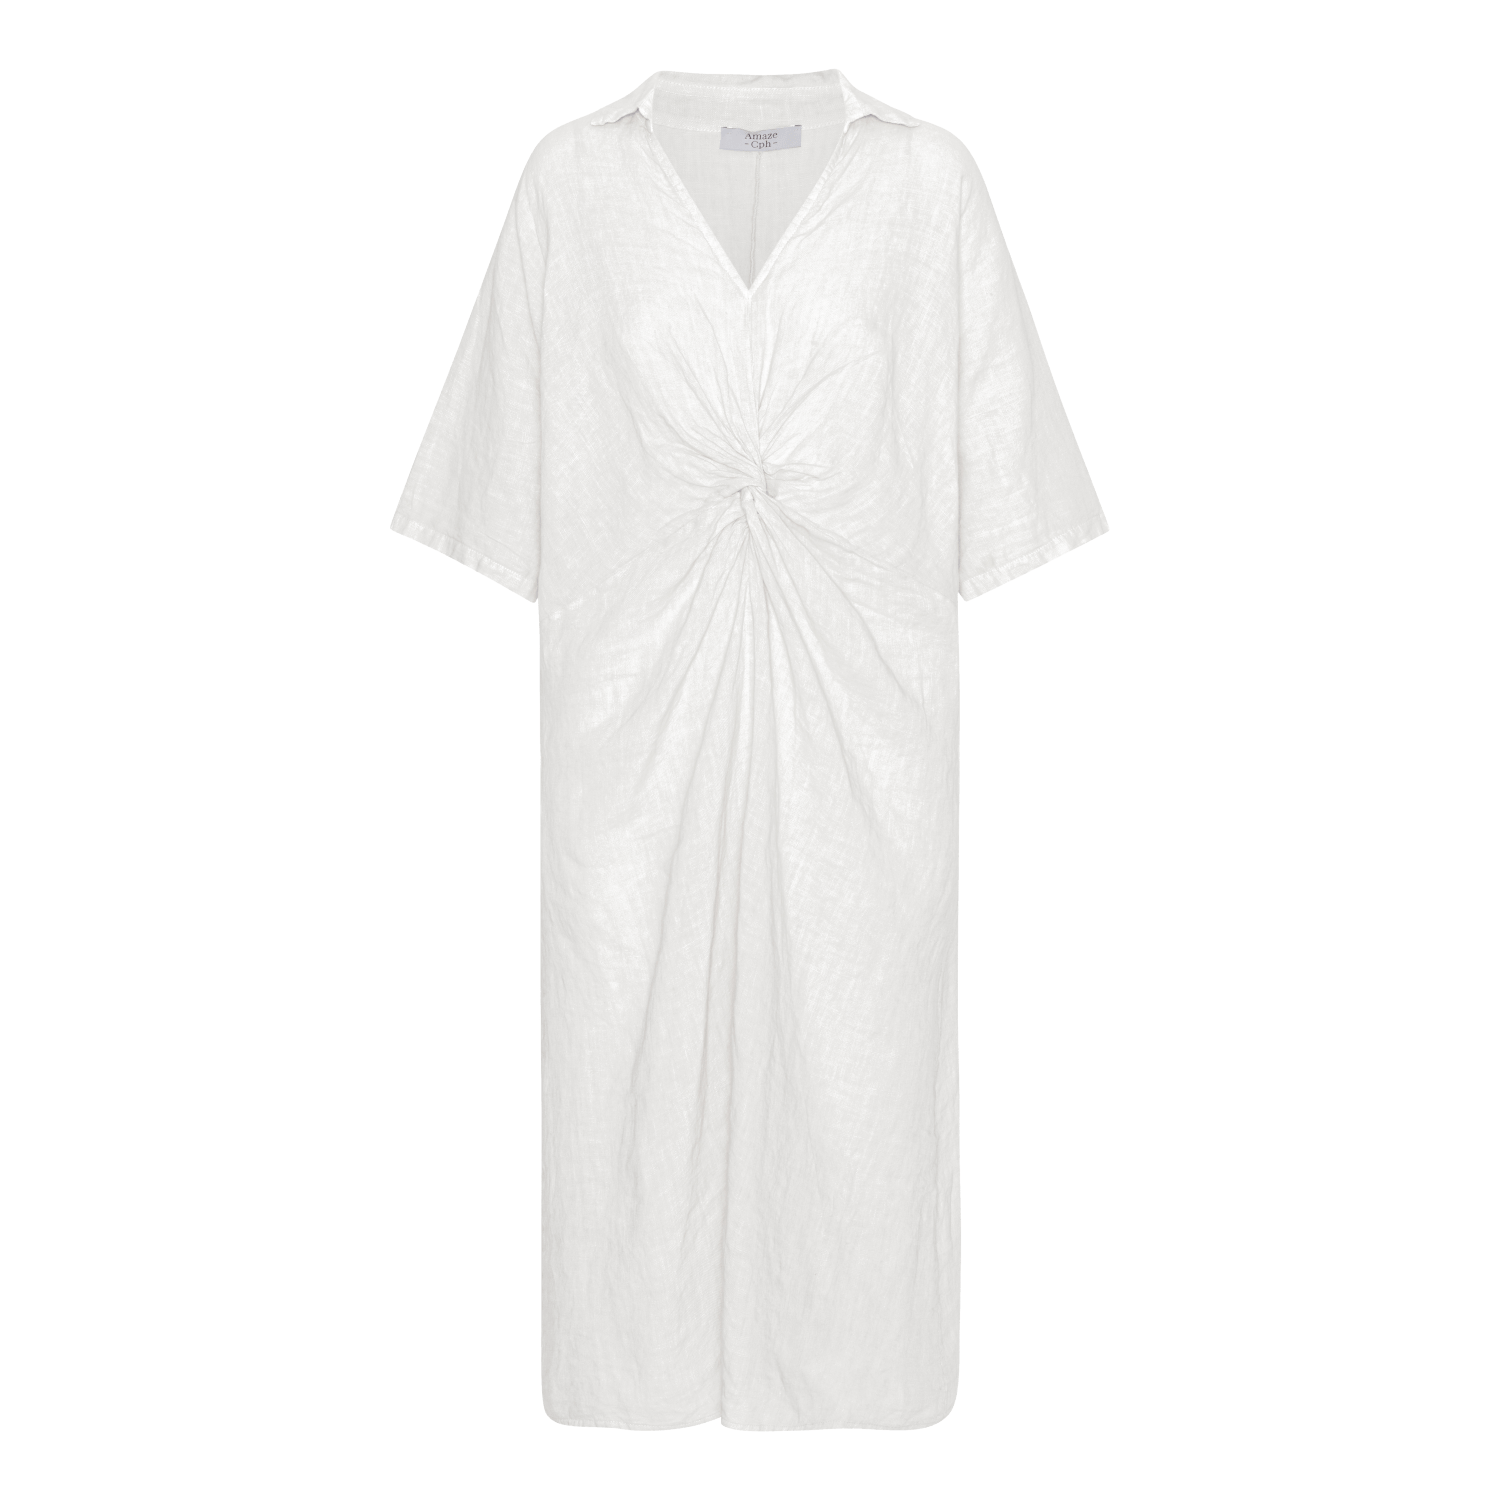 Linen Twist Dress - White - Amaze Cph - White - S/M